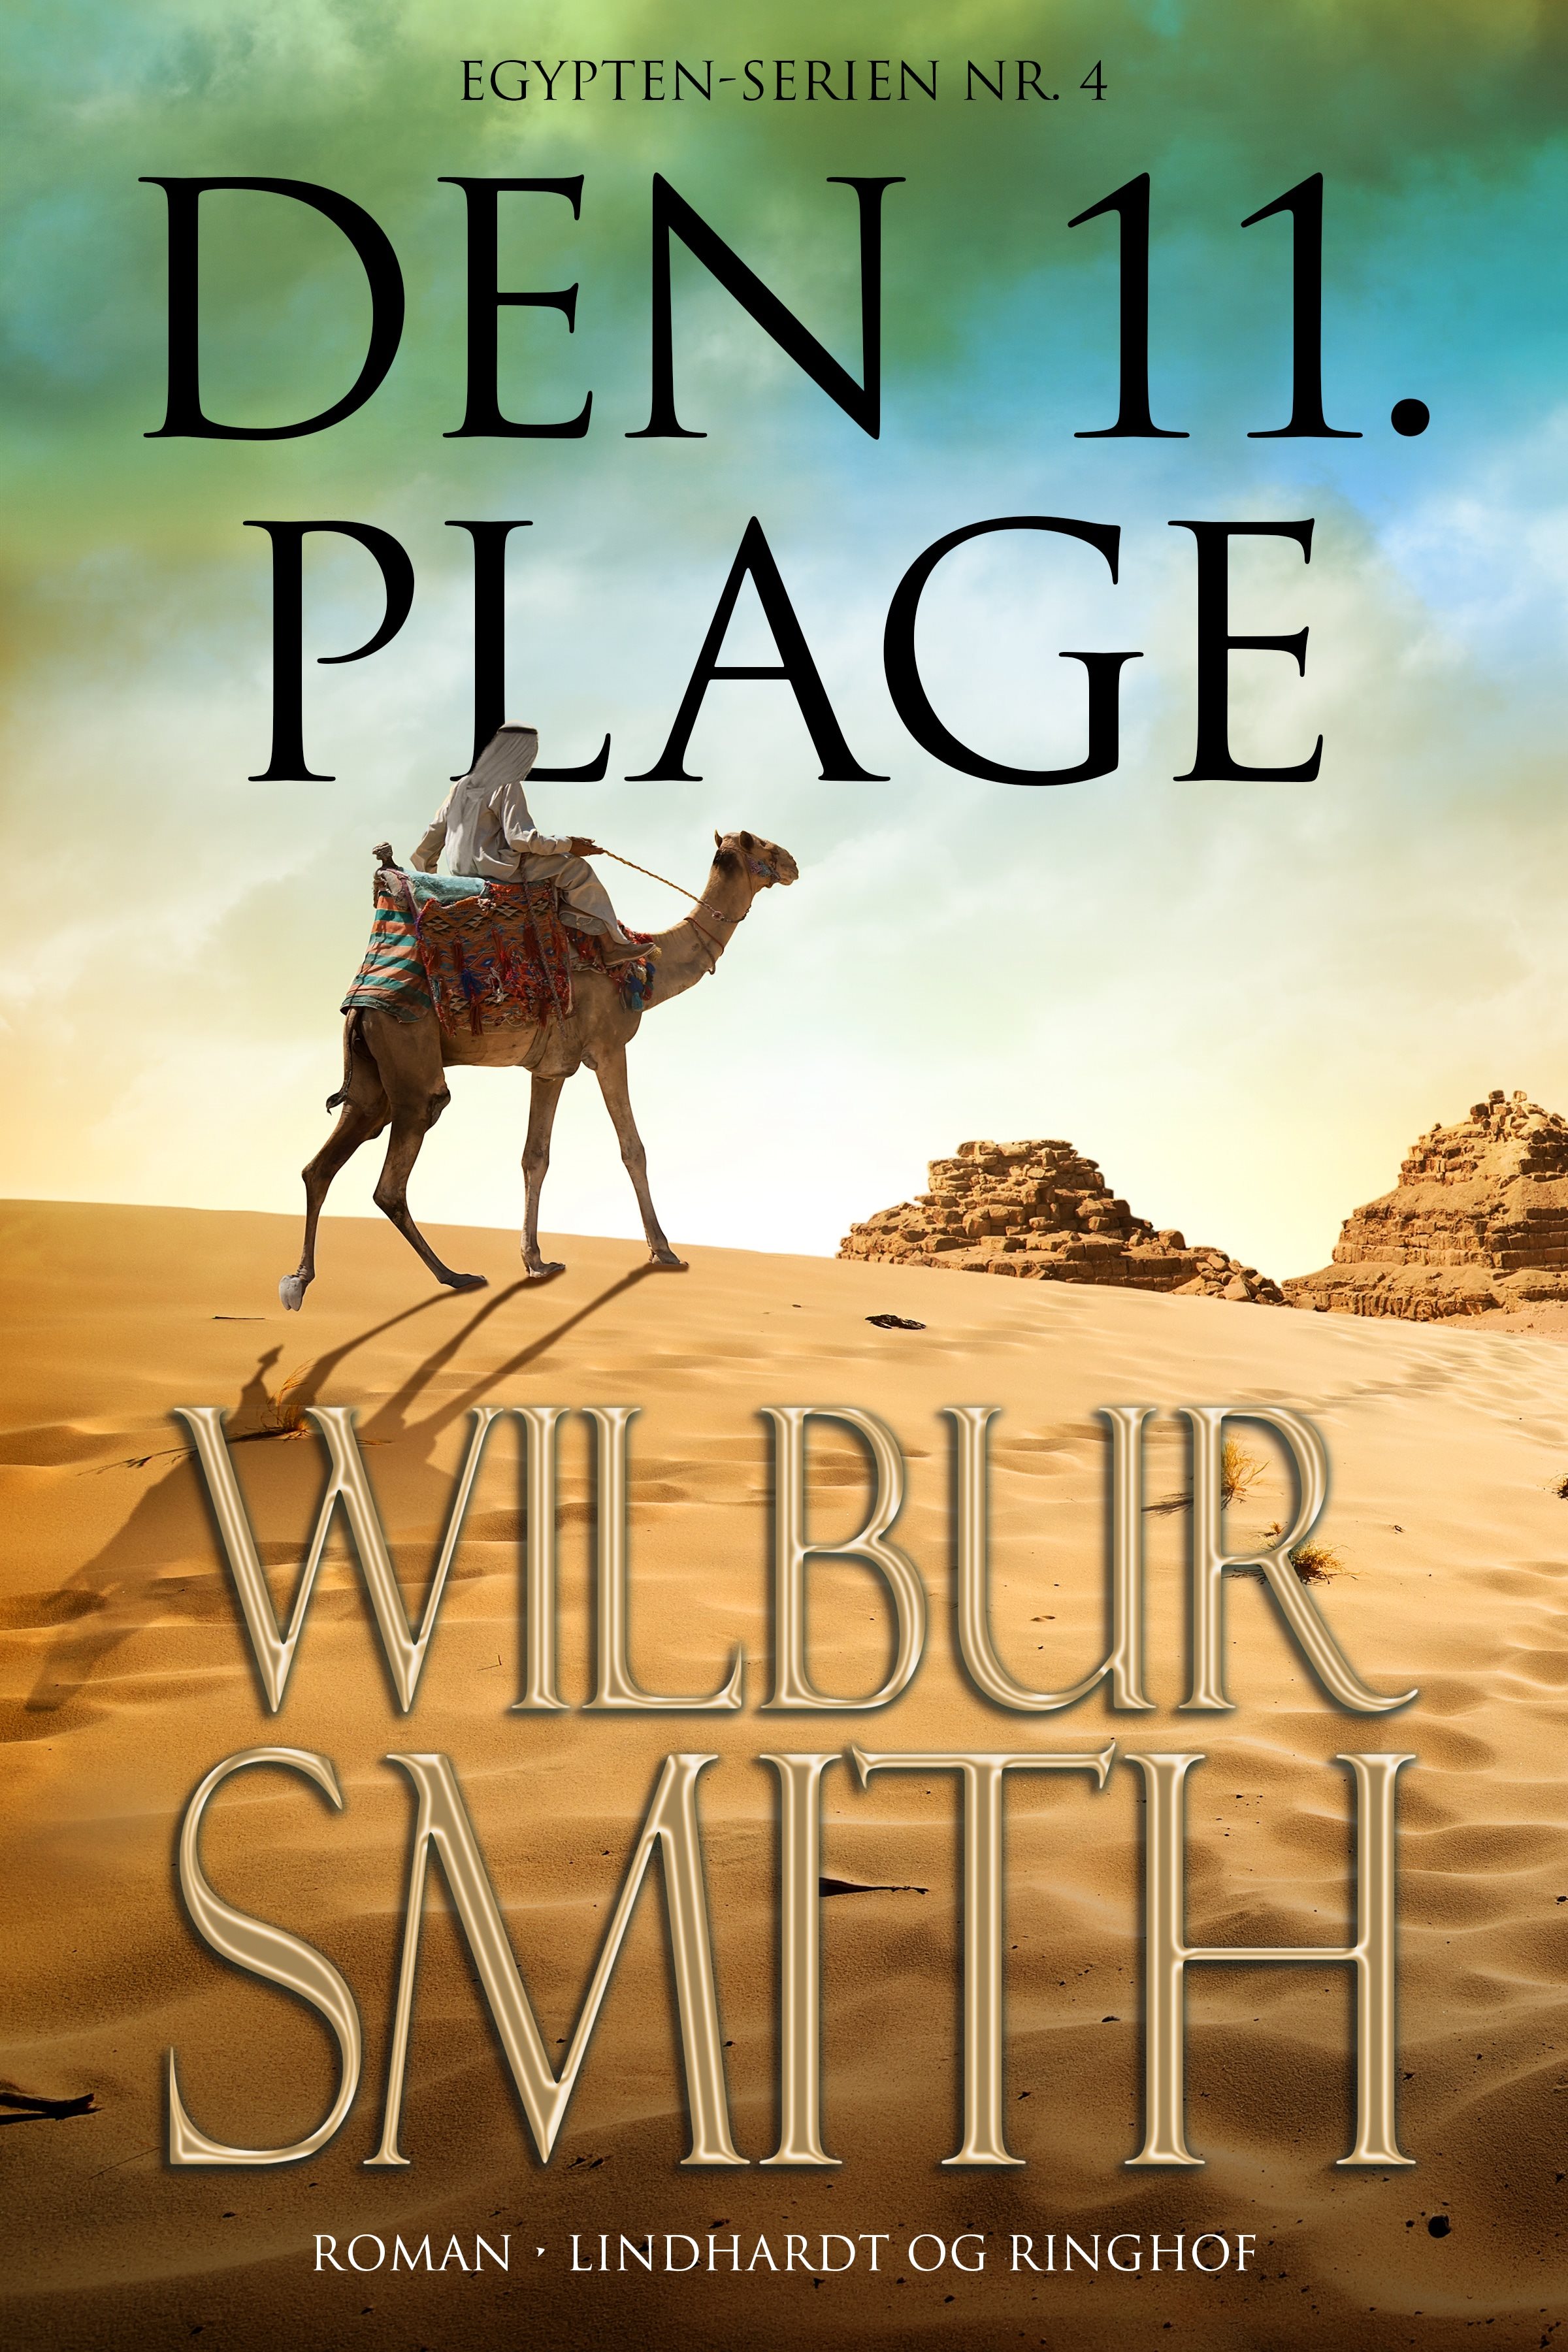 Wilbur Smith, Den 11. plage, Egypten-serien